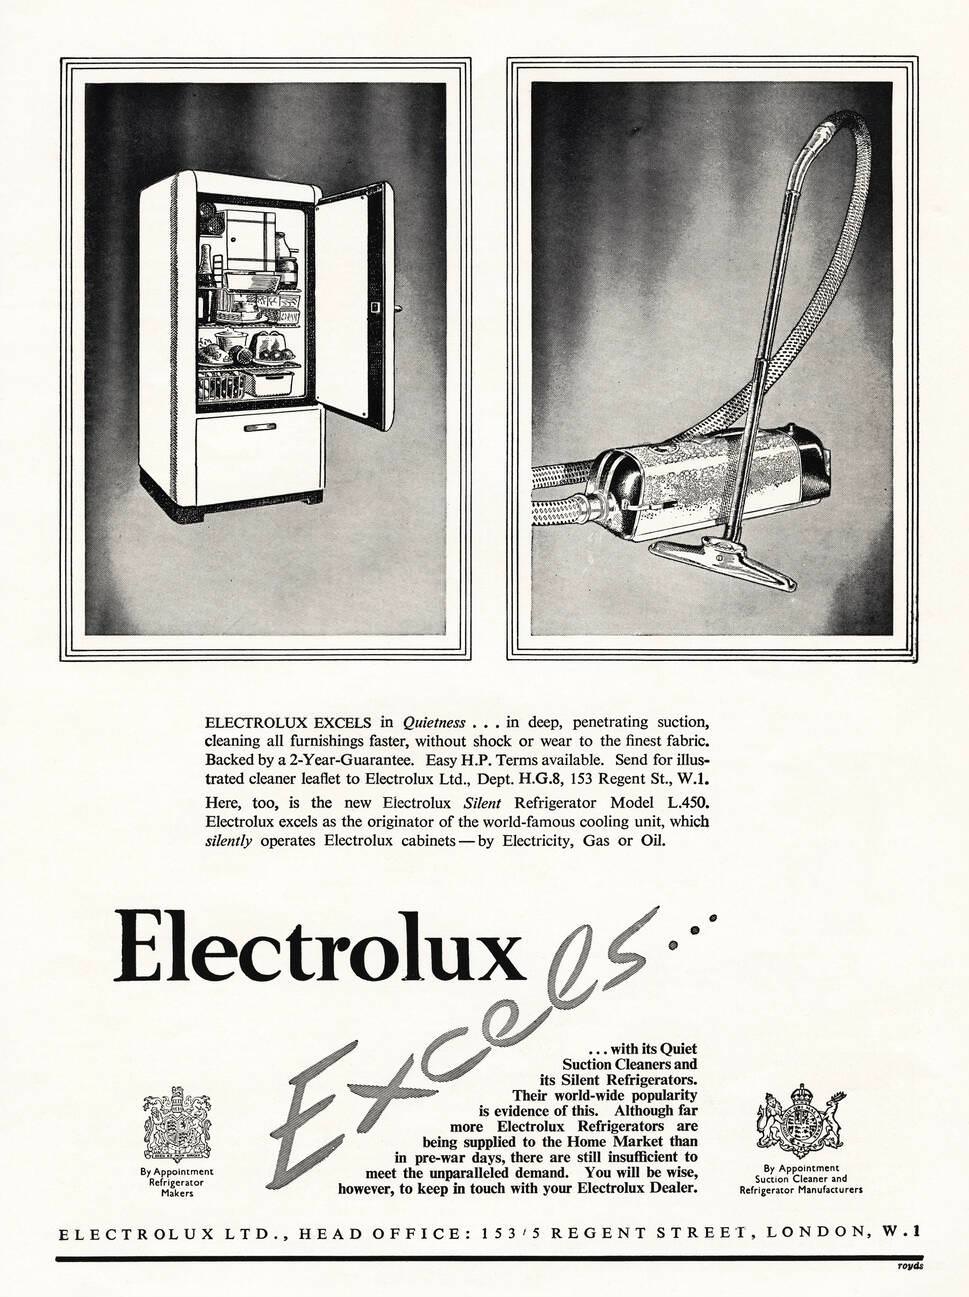 Electrolux vacuum cleaner & refrigerator ad, 1950.